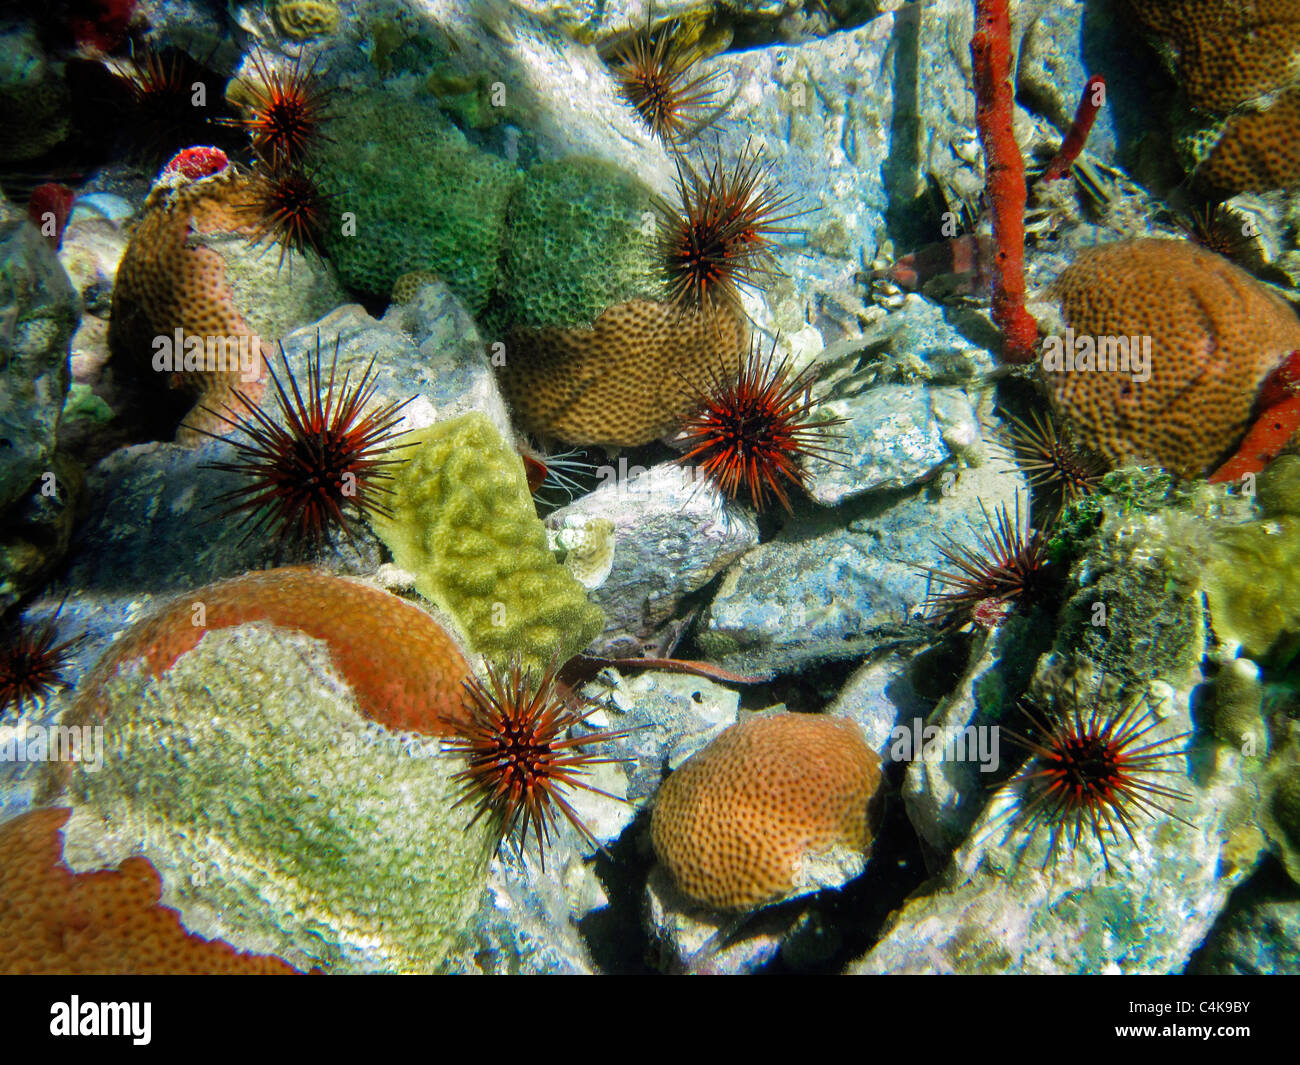 Lange Spined Seeigel und roten Korallen. St. John. Virgin IslandsVirgin Islands Jungferninseln Coral Reef Nationalmonument. Stockfoto